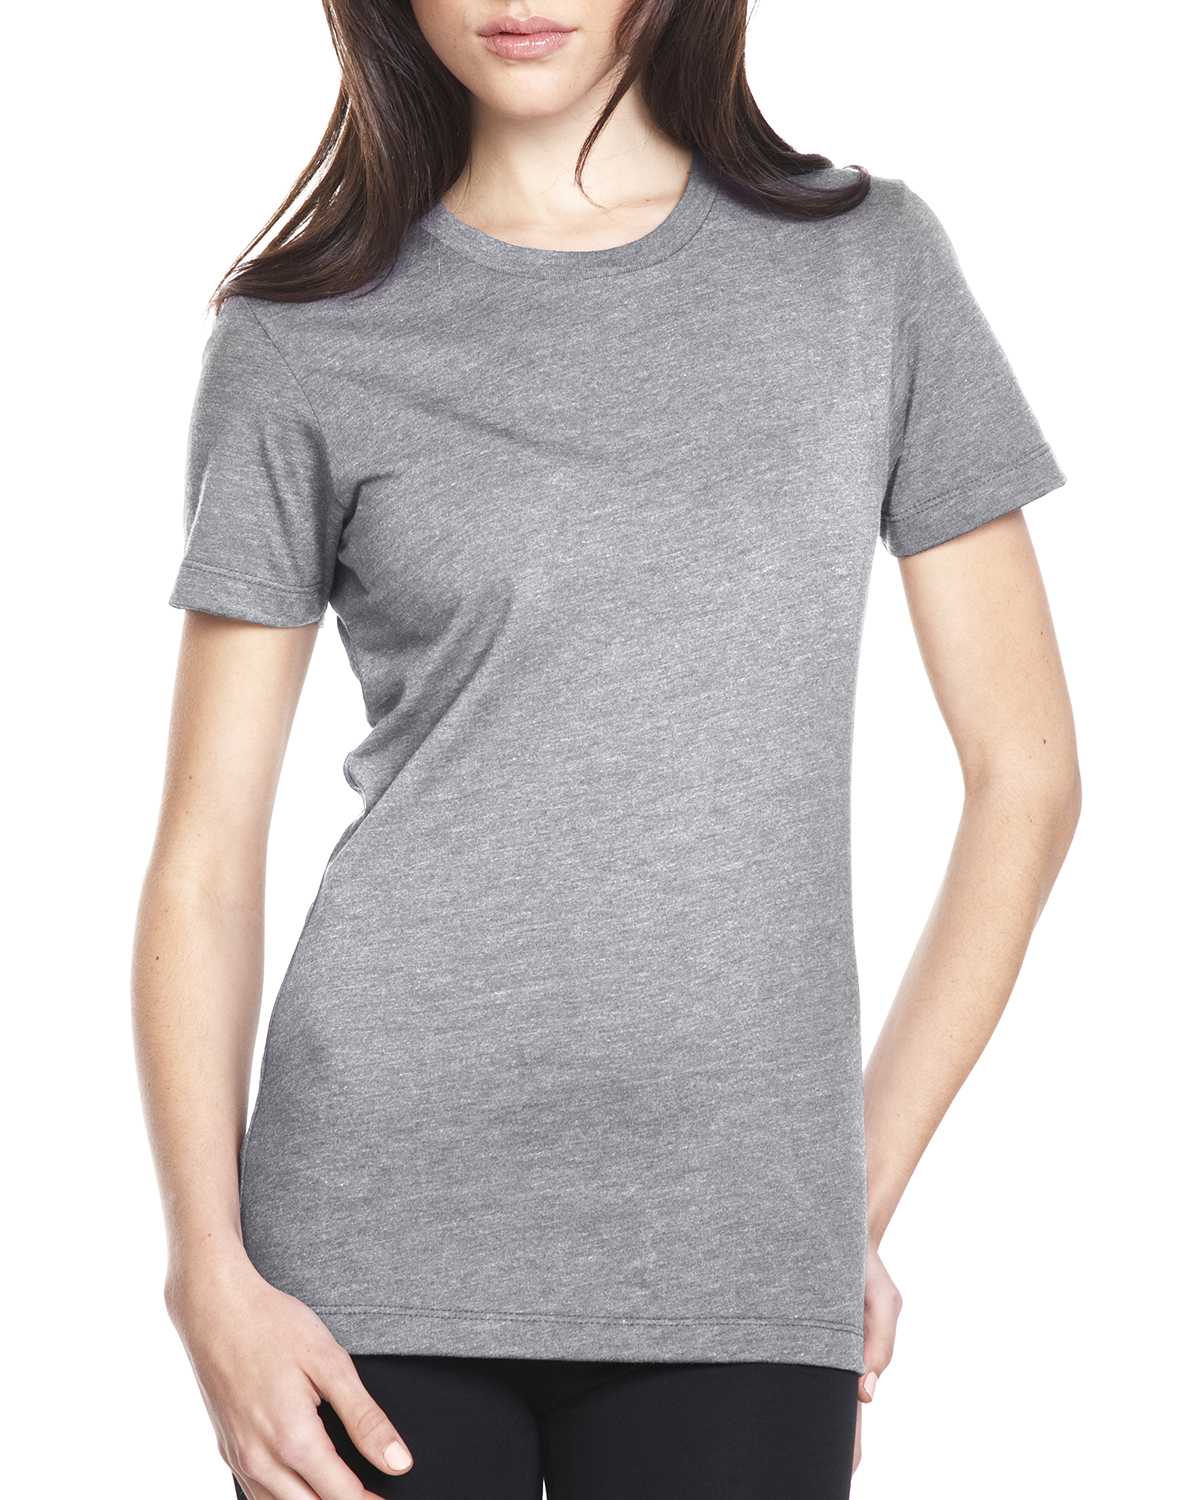 Next Level 6610 Ladies' CVC T-Shirt | ApparelChoice.com